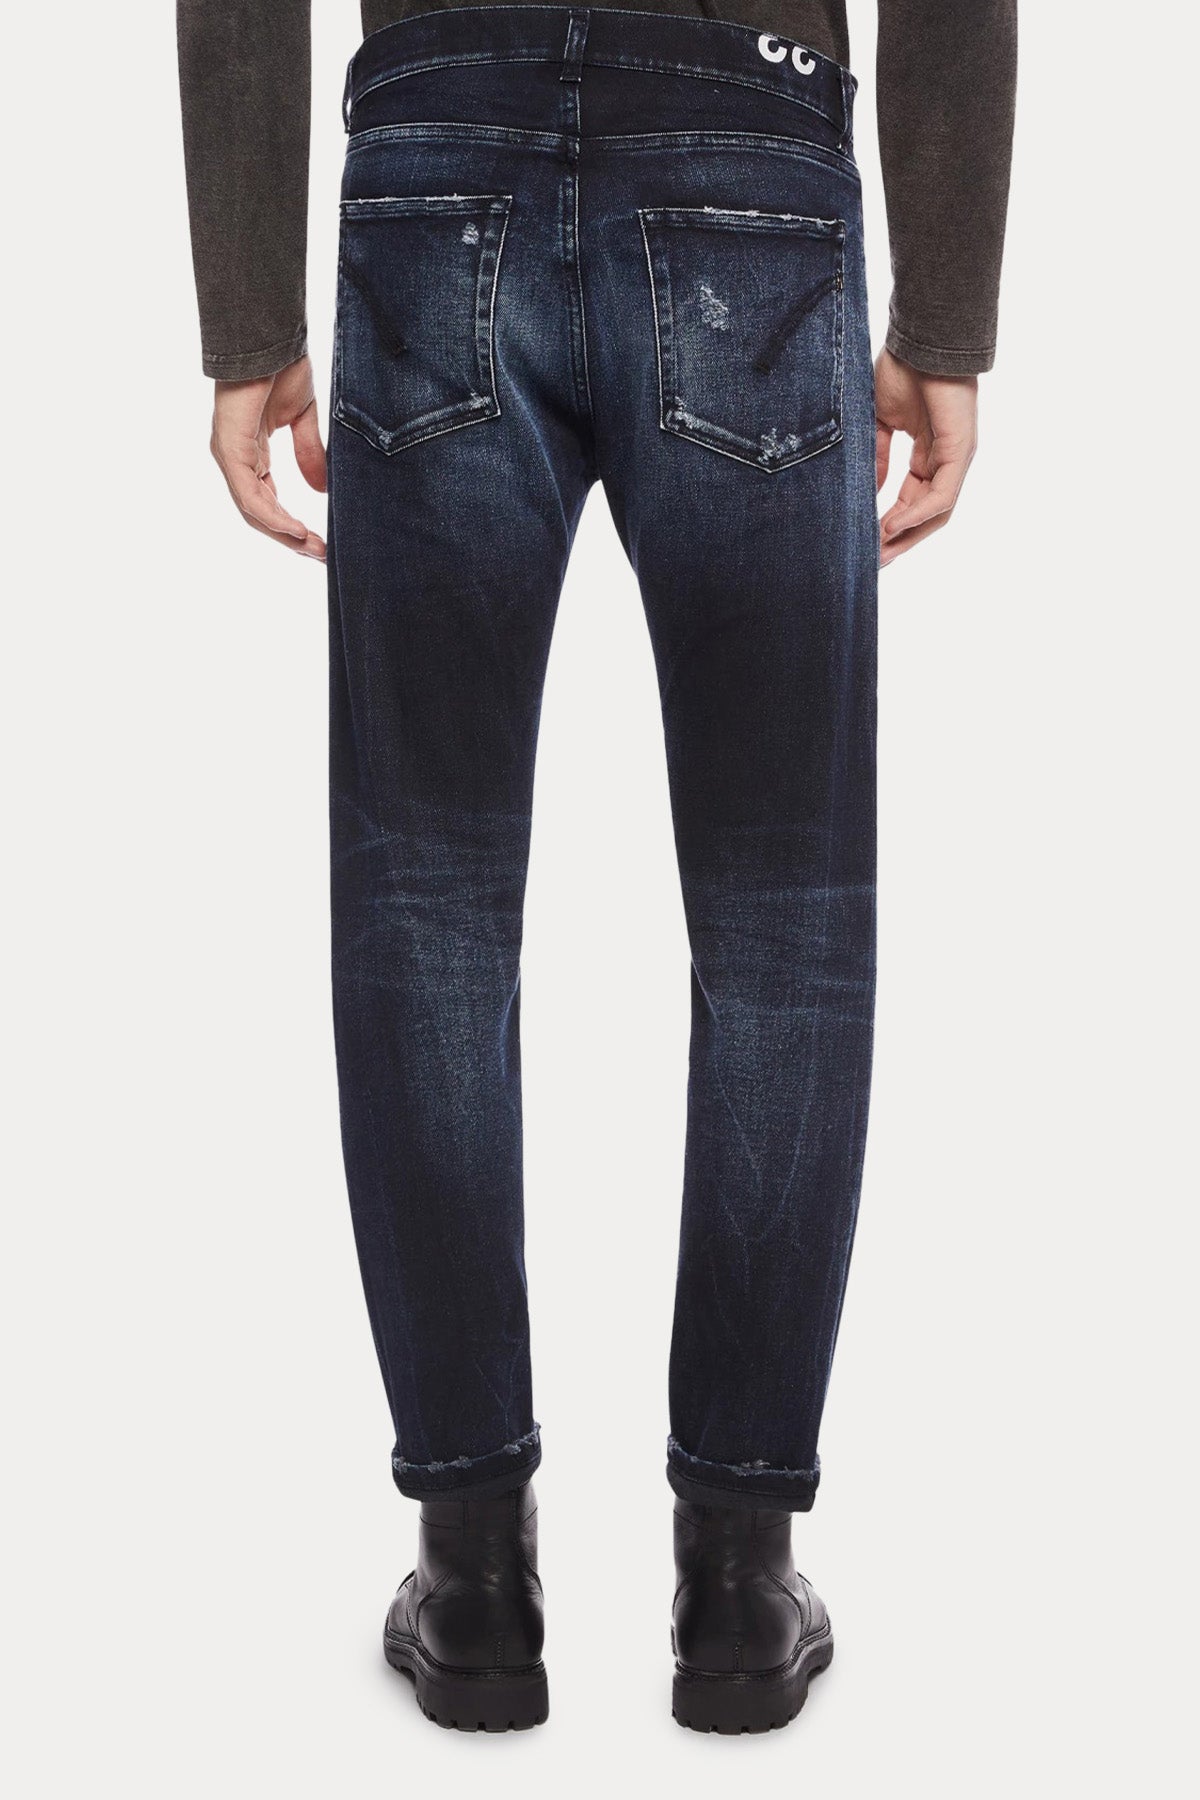 Dondup Dian Carrot Slim Fit Jeans-Libas Trendy Fashion Store